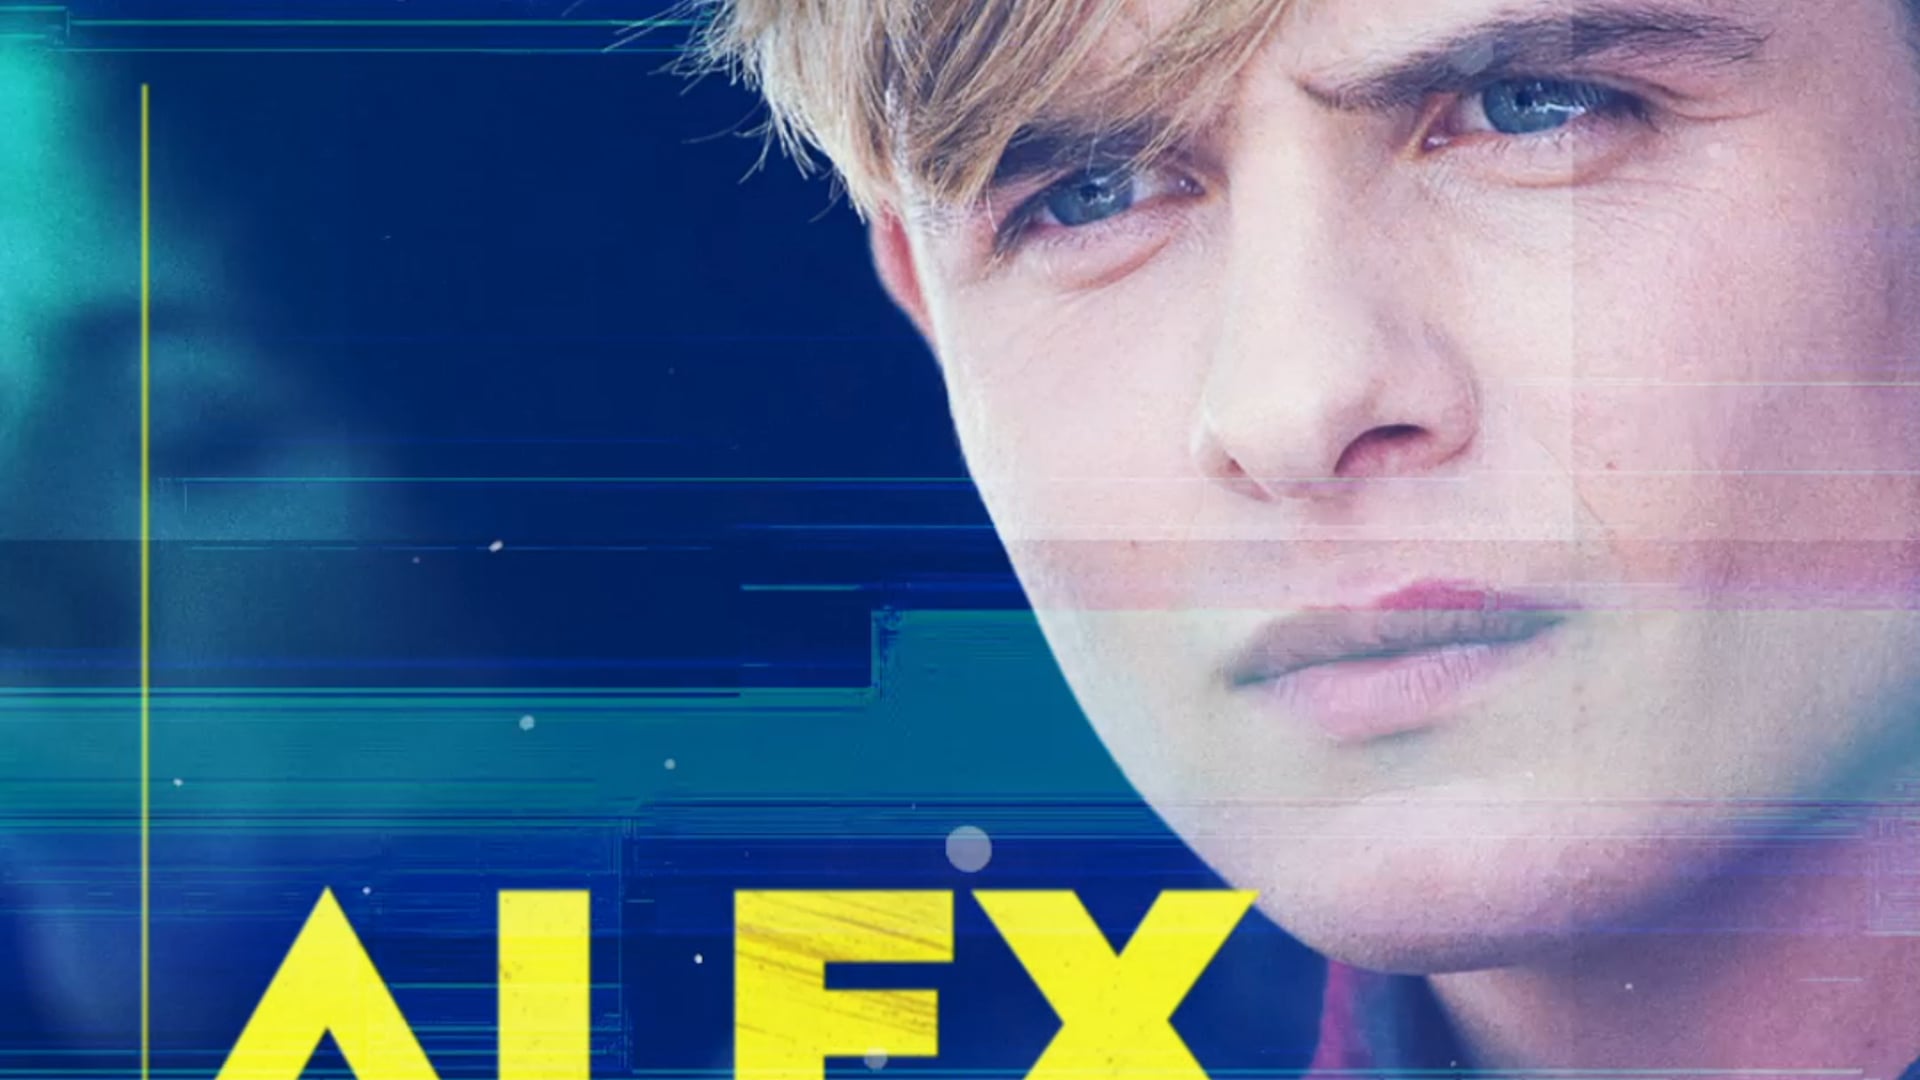 Sony - Alex Rider IG Ad - (Editor, Graphics)